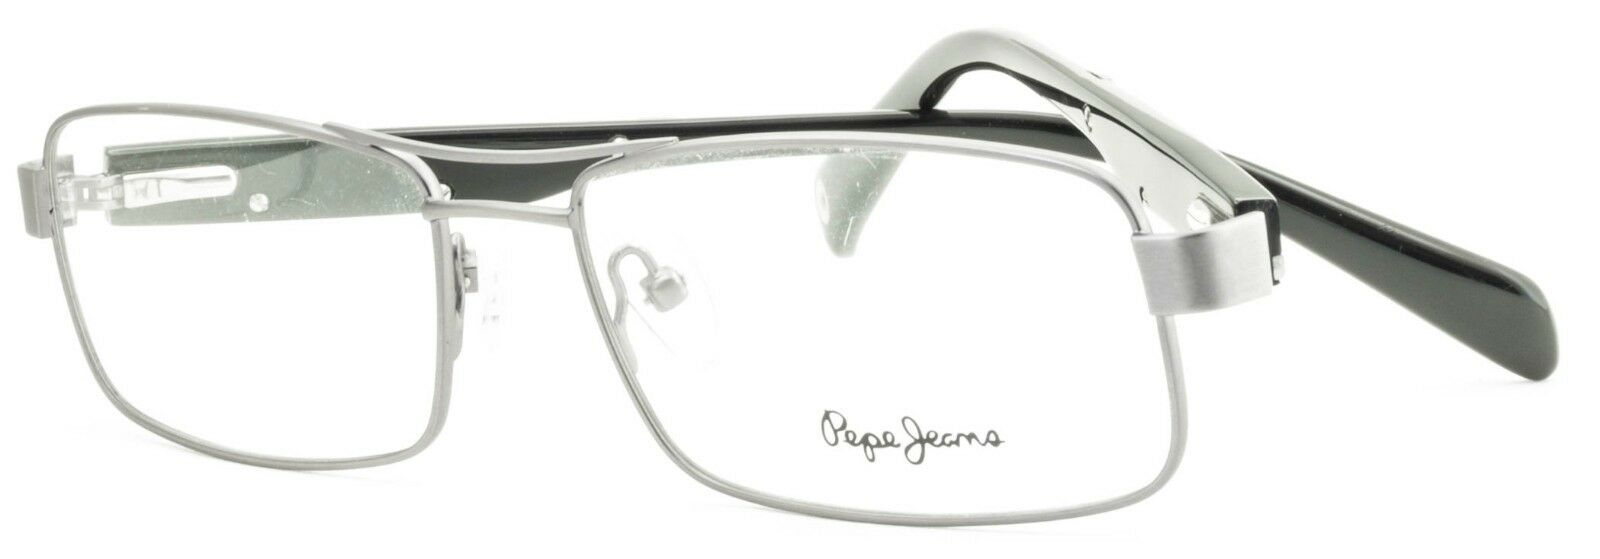 PEPE JEANS PJ1136 col C2 Eyewear FRAMES NEW Glasses Eyeglasses RX OpticalTrusted